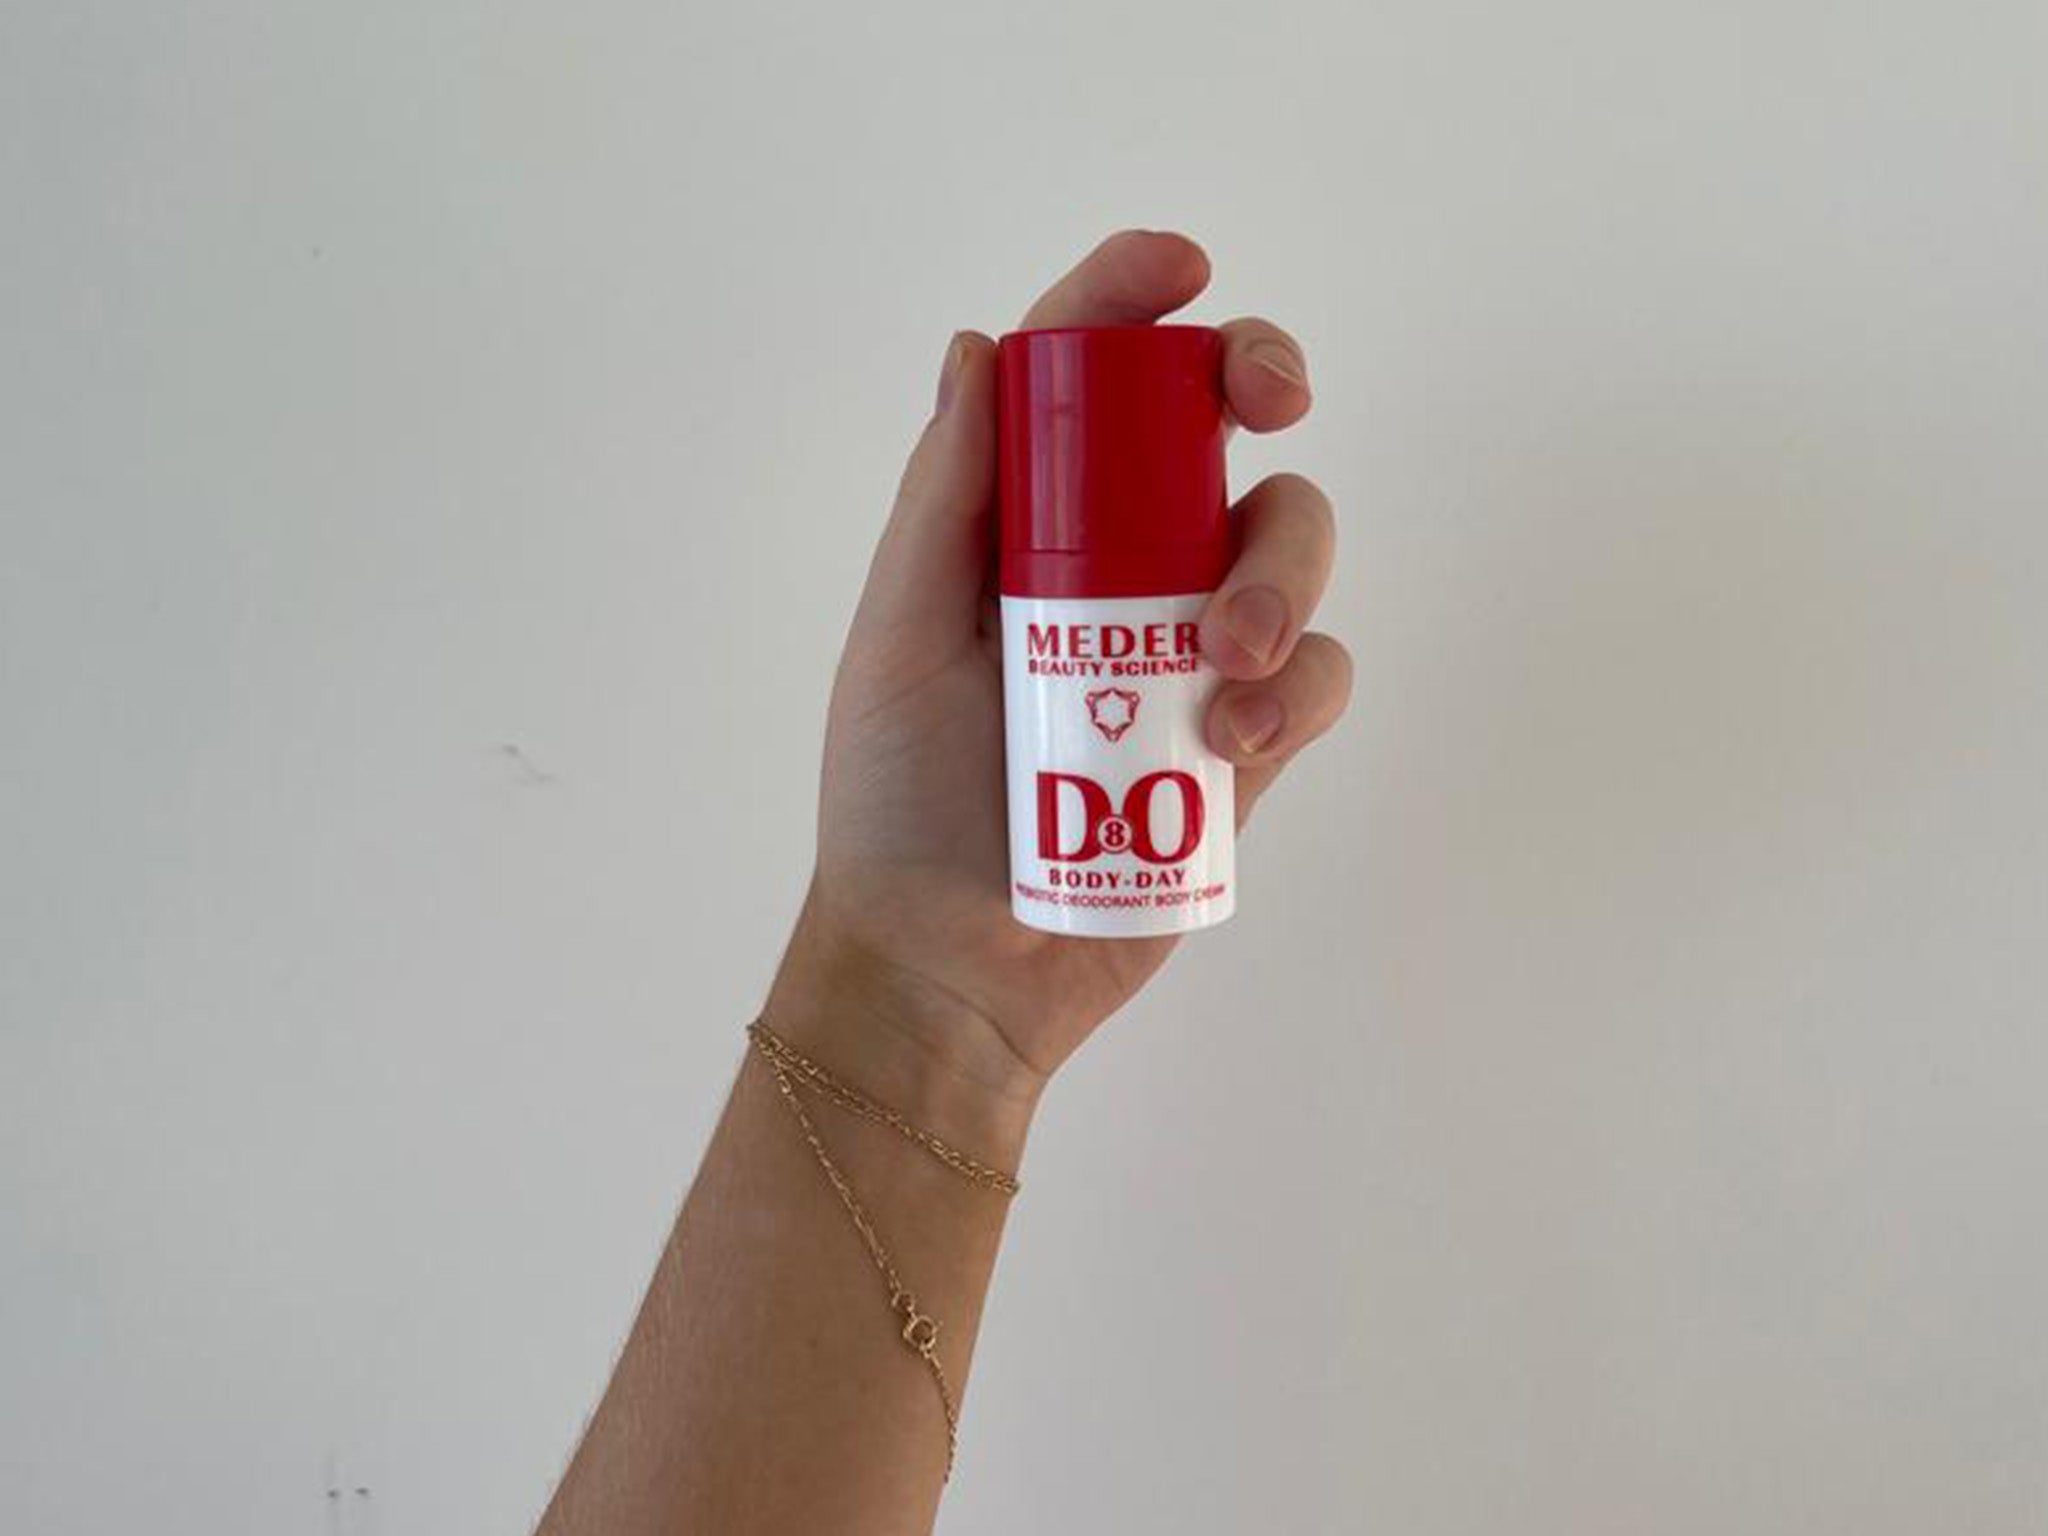 Meder body-day prebiotic deodorant body cream